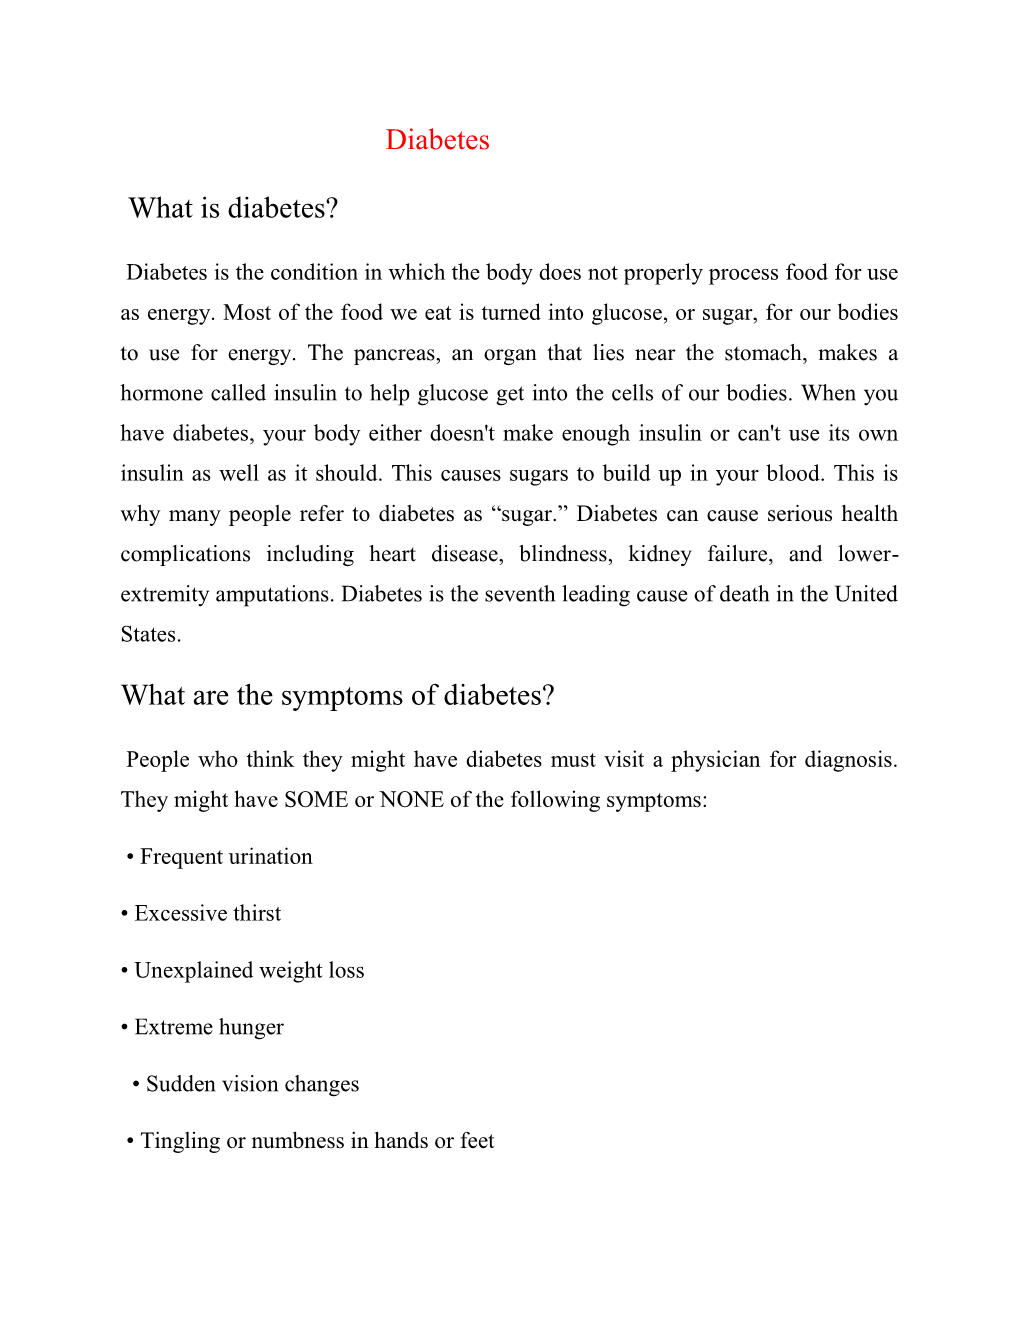 Diabetes What Is Diabetes? What Are the Symptoms of Diabetes?